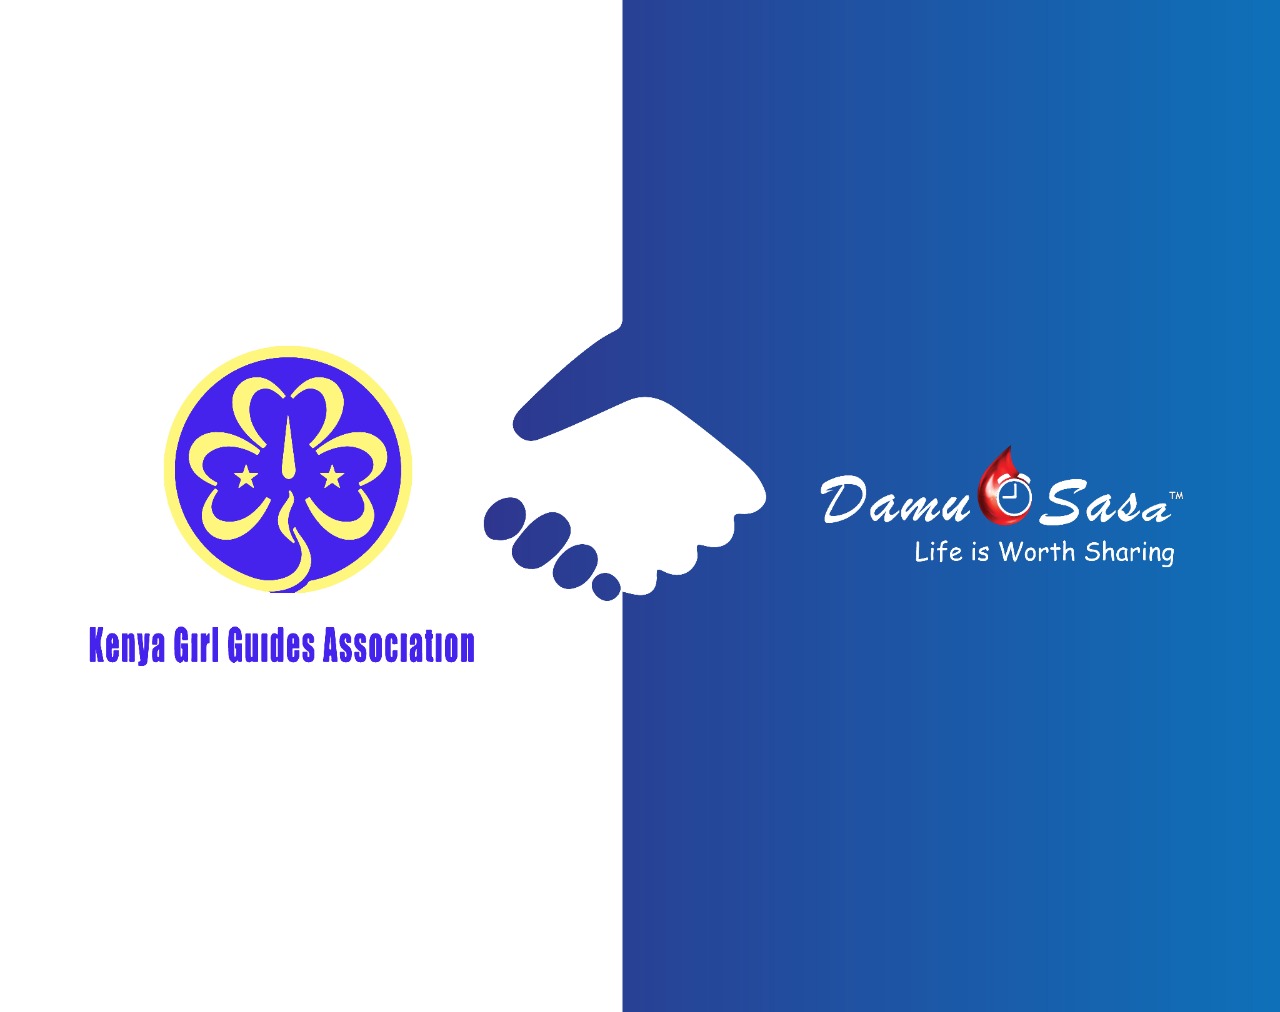 Kenya Girl Guides Association partners with Damu Sasa